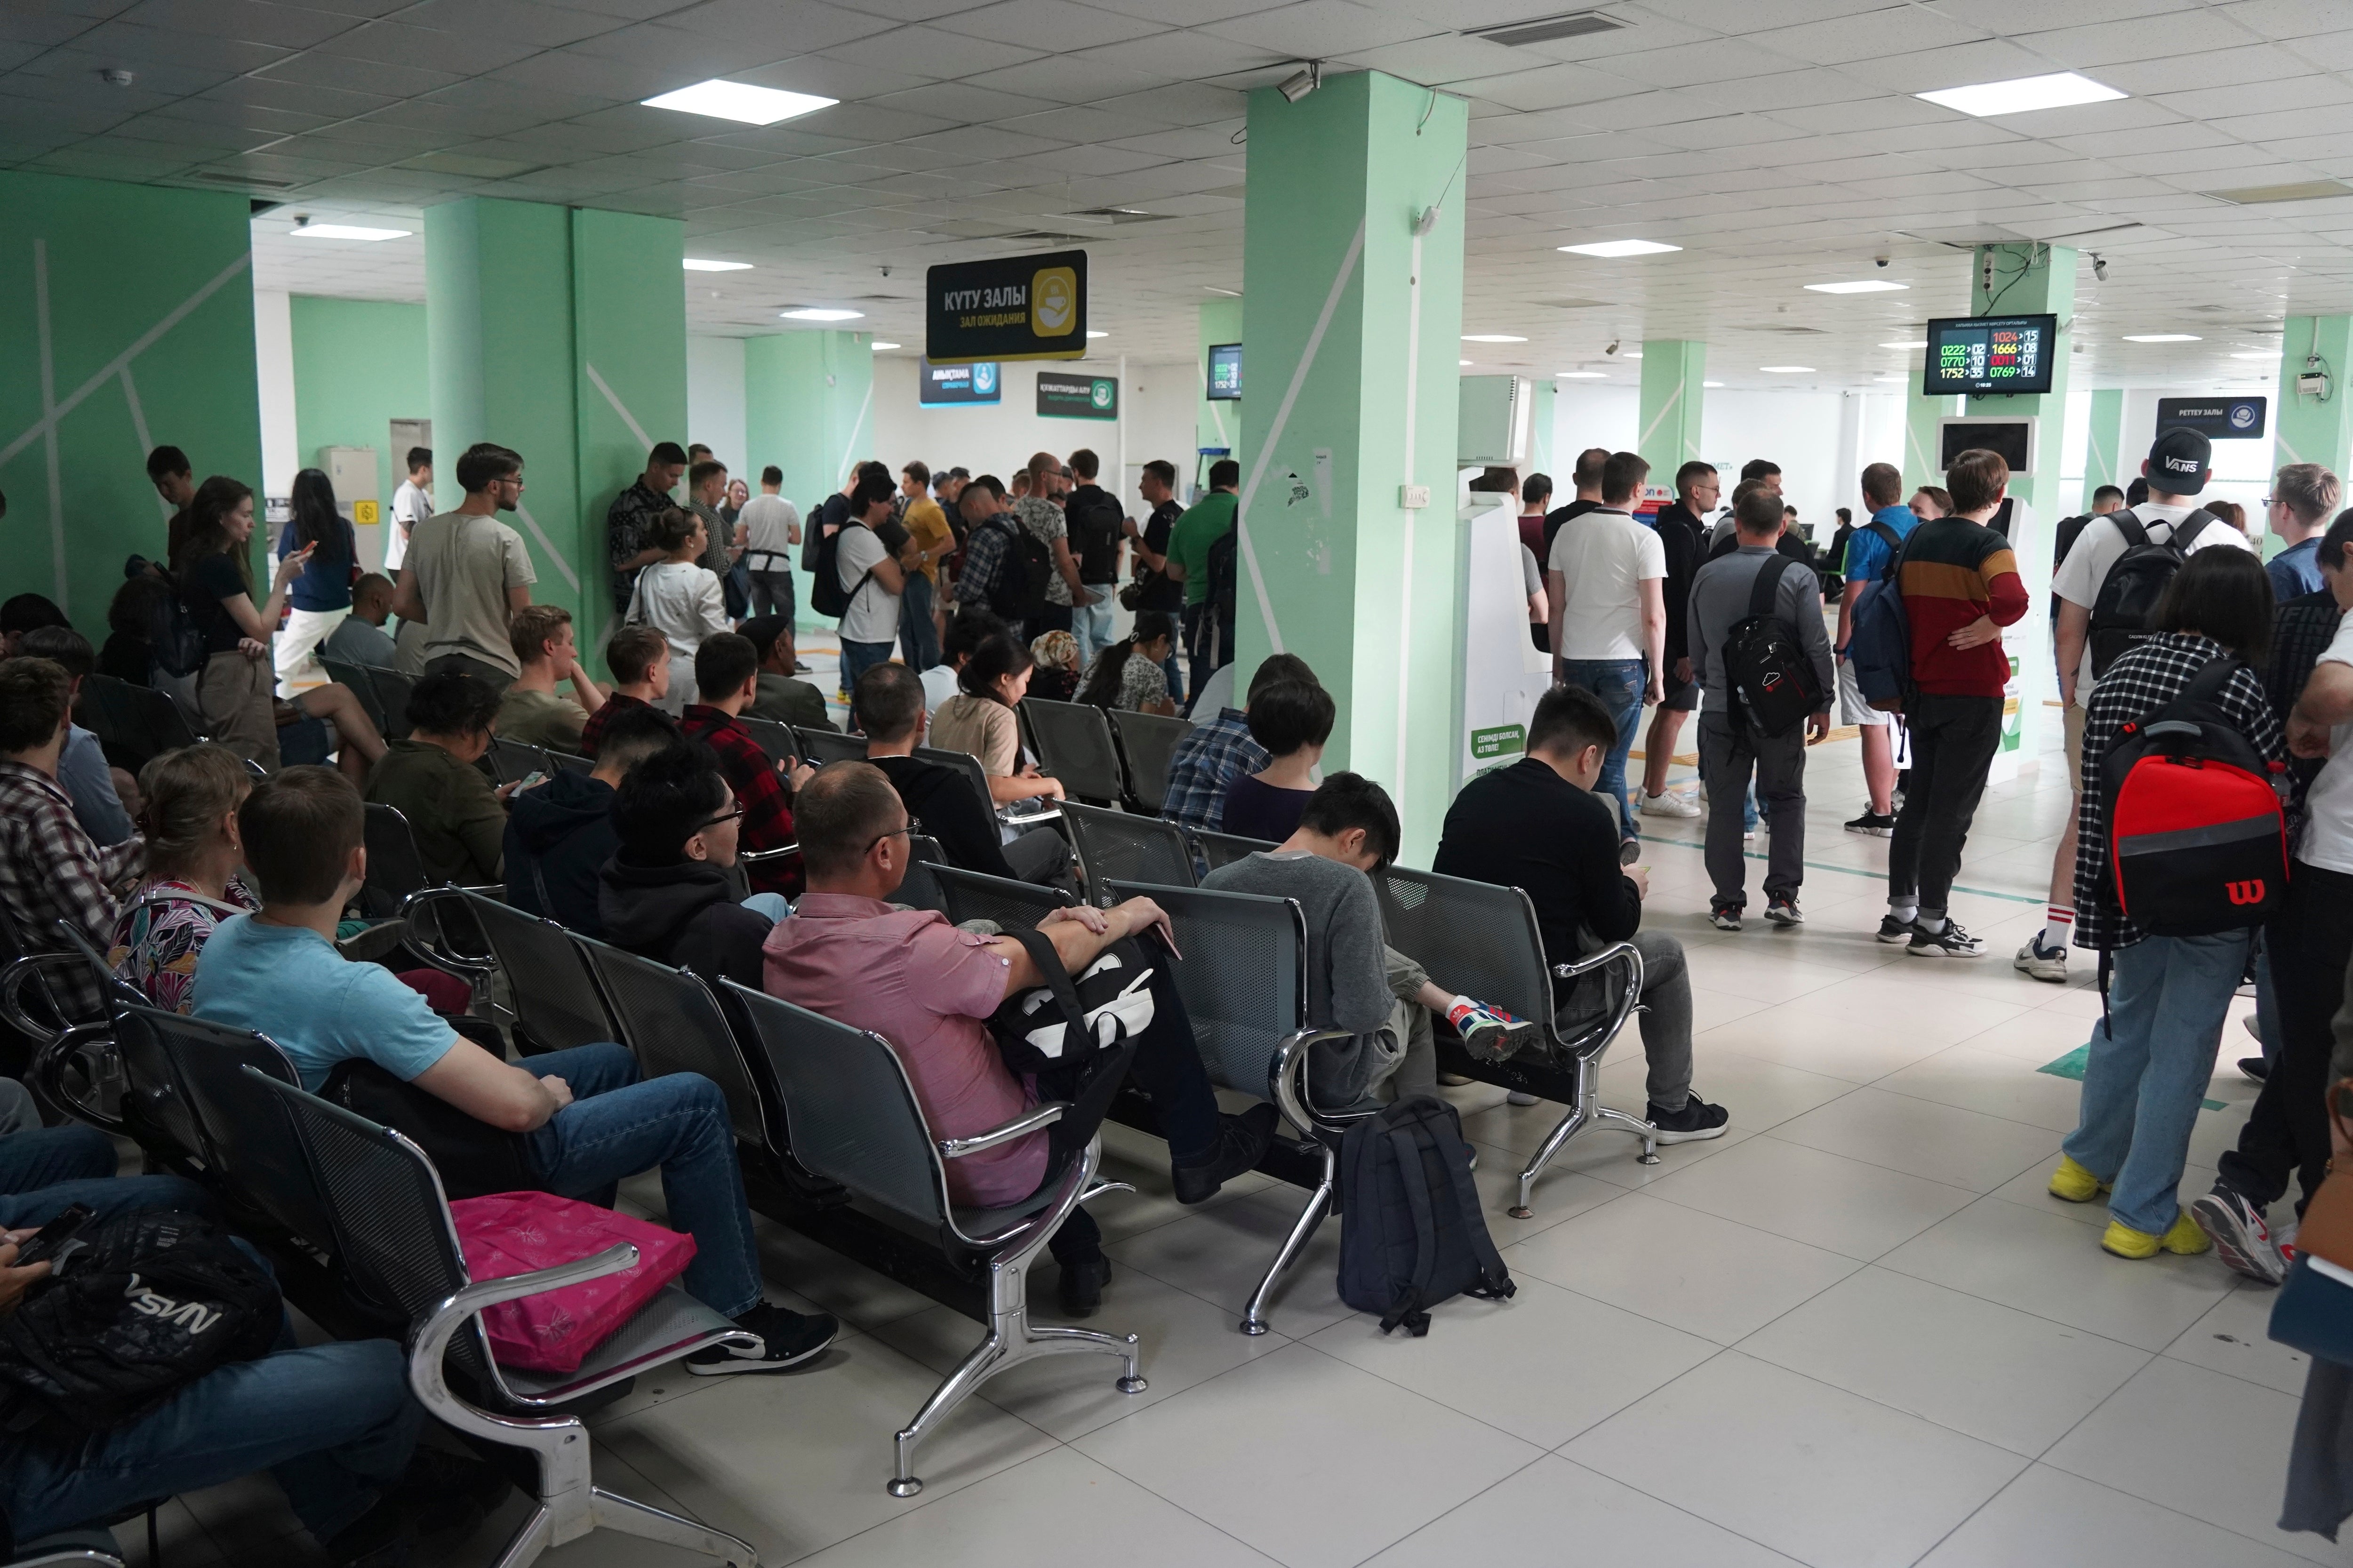 Russians wait to get personal identification numbers in Almaty, Kazakhstan on 27 September